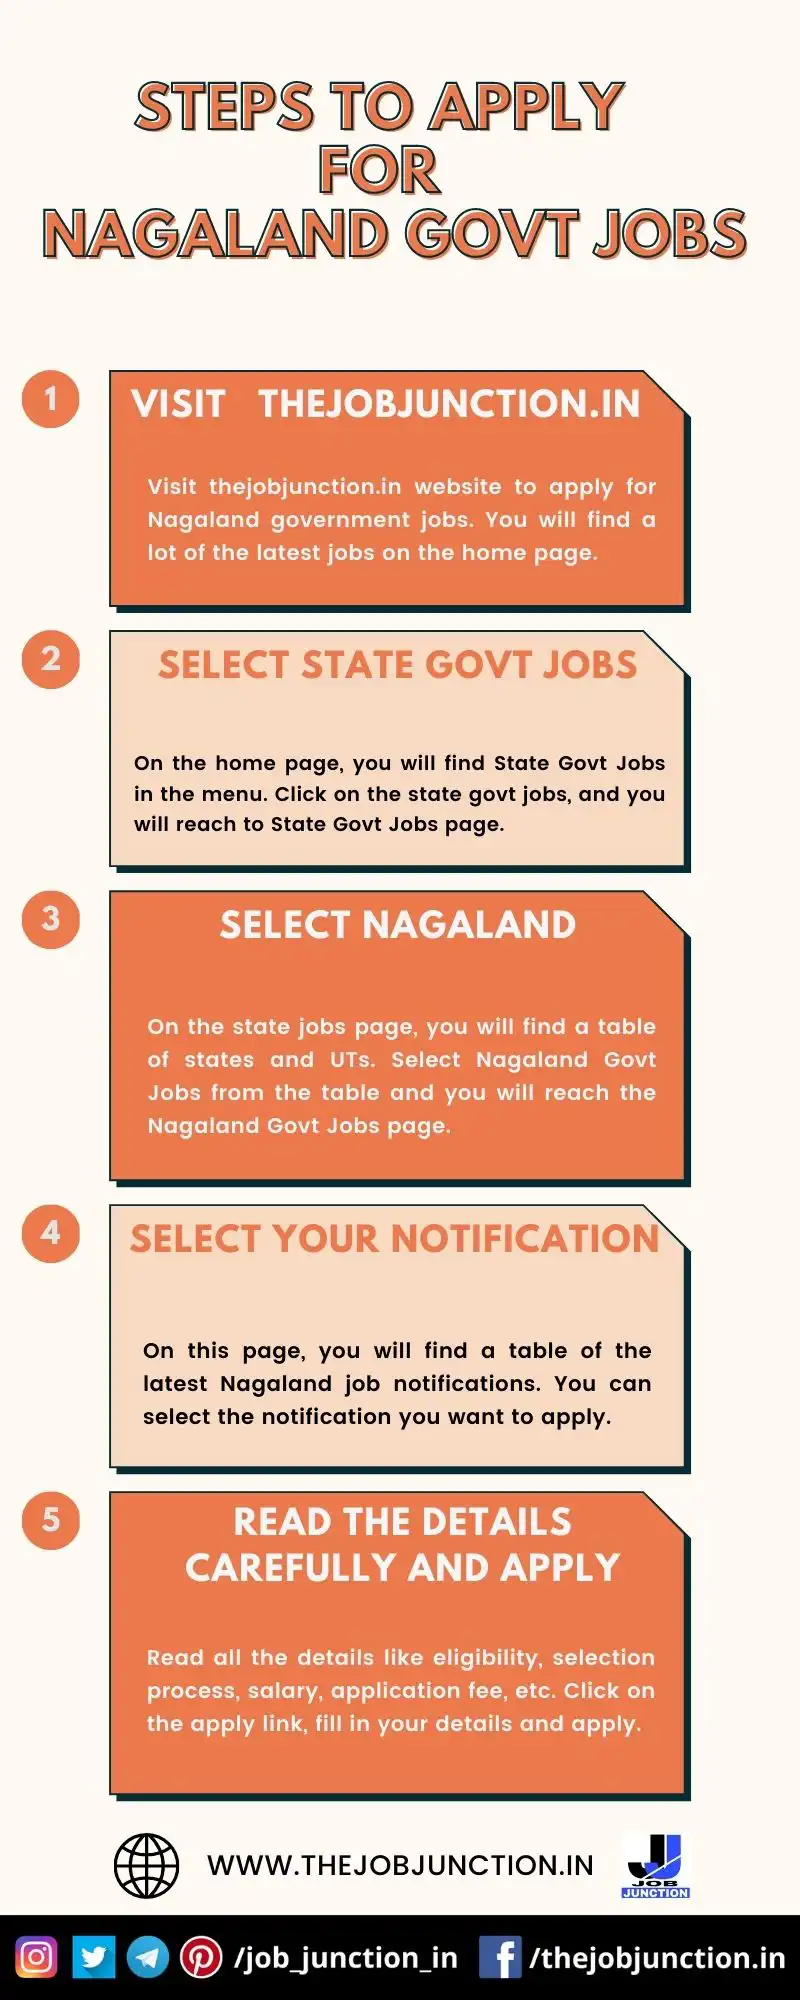 STEPS TO APPLY FOR NAGALAND GOVT JOBS